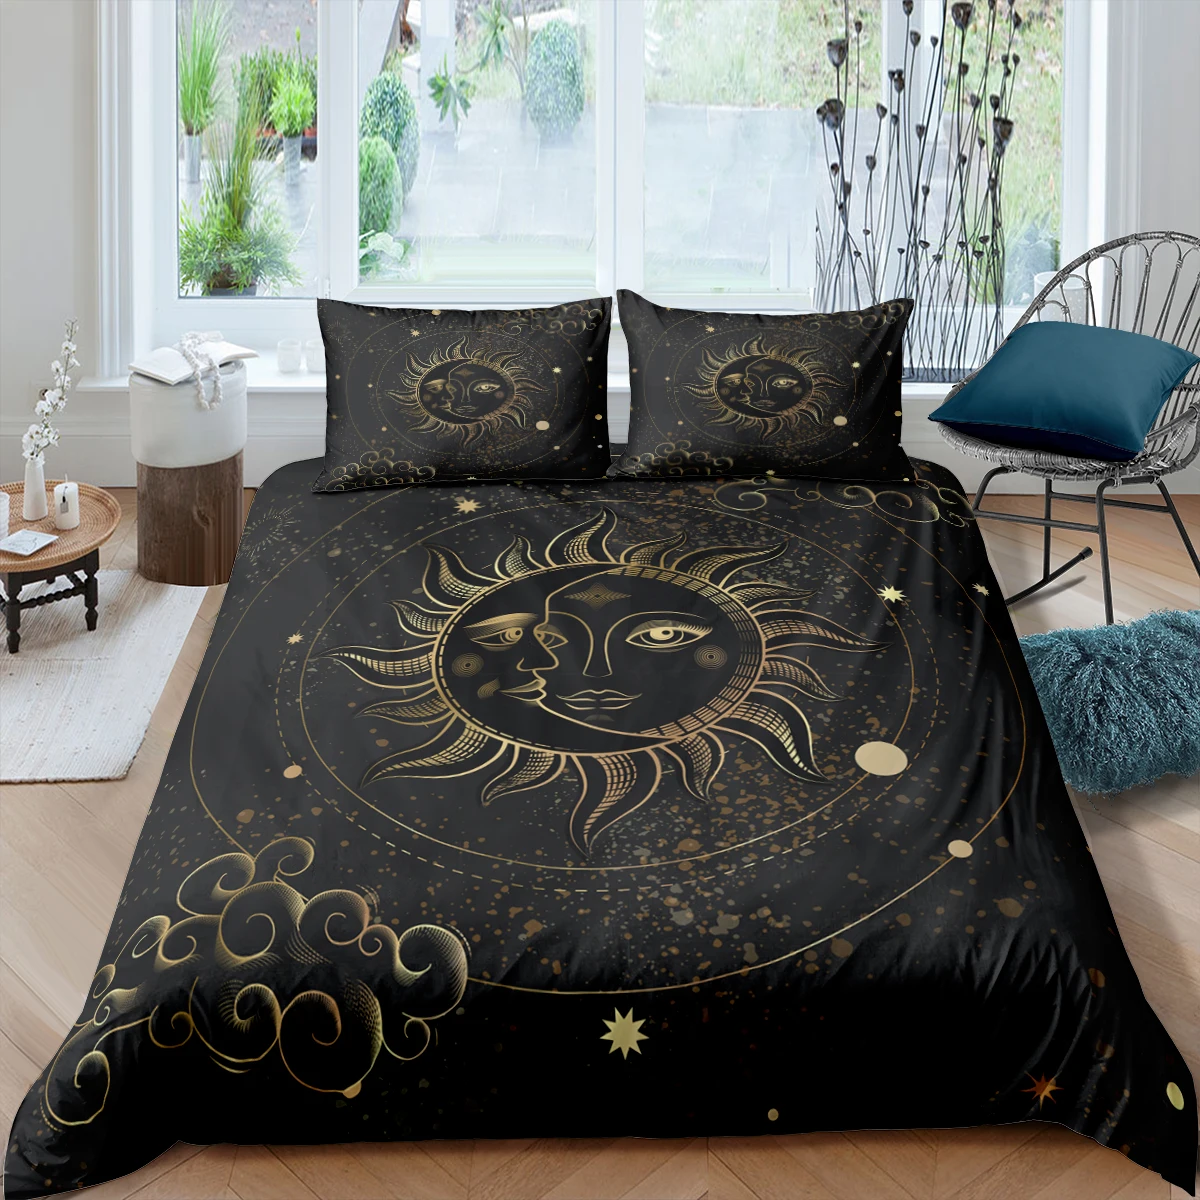 Home Textiles Luxury 3D Sun Moon Duvet Cover Set Pillowcase Tarot Bedding Set Queen and King Size Comforter Bedding Set